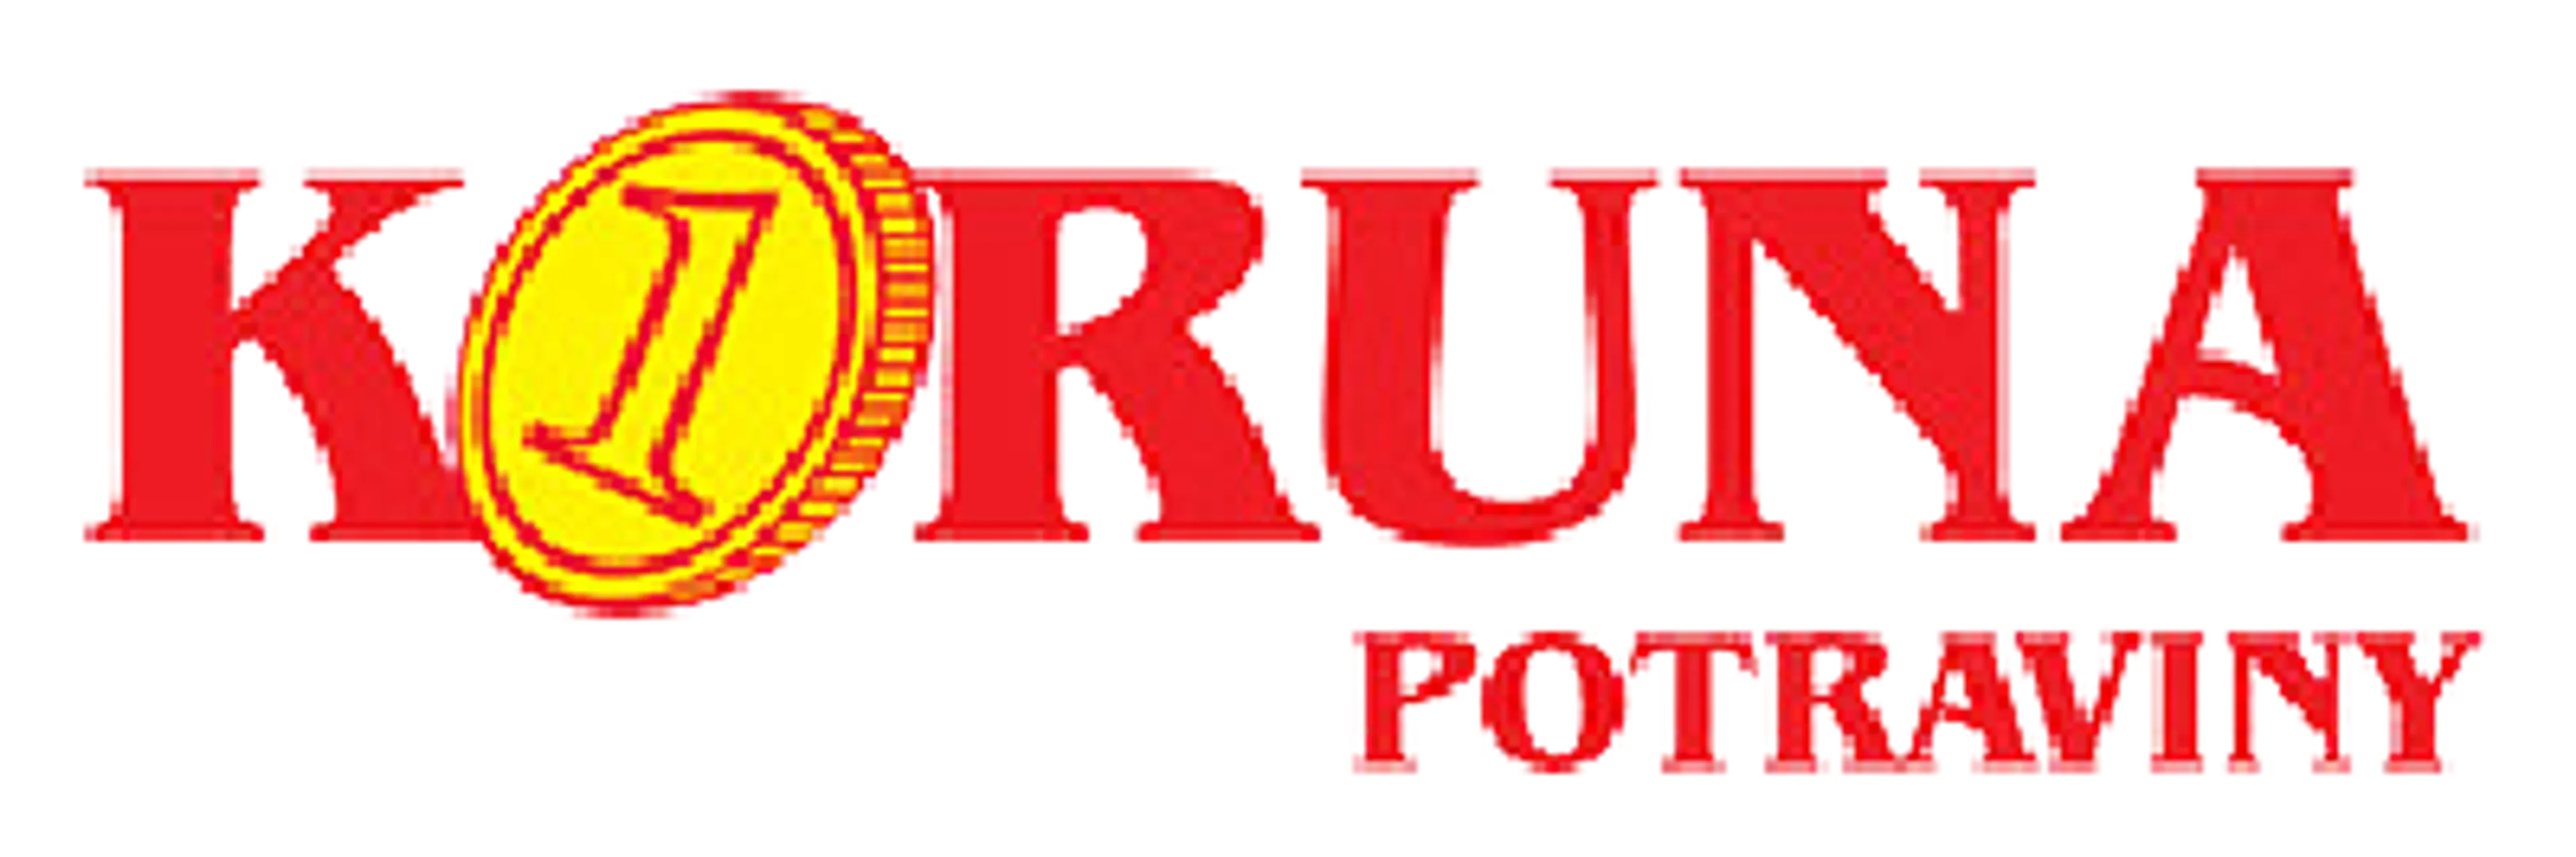 POTRAVINY KORUNA logo